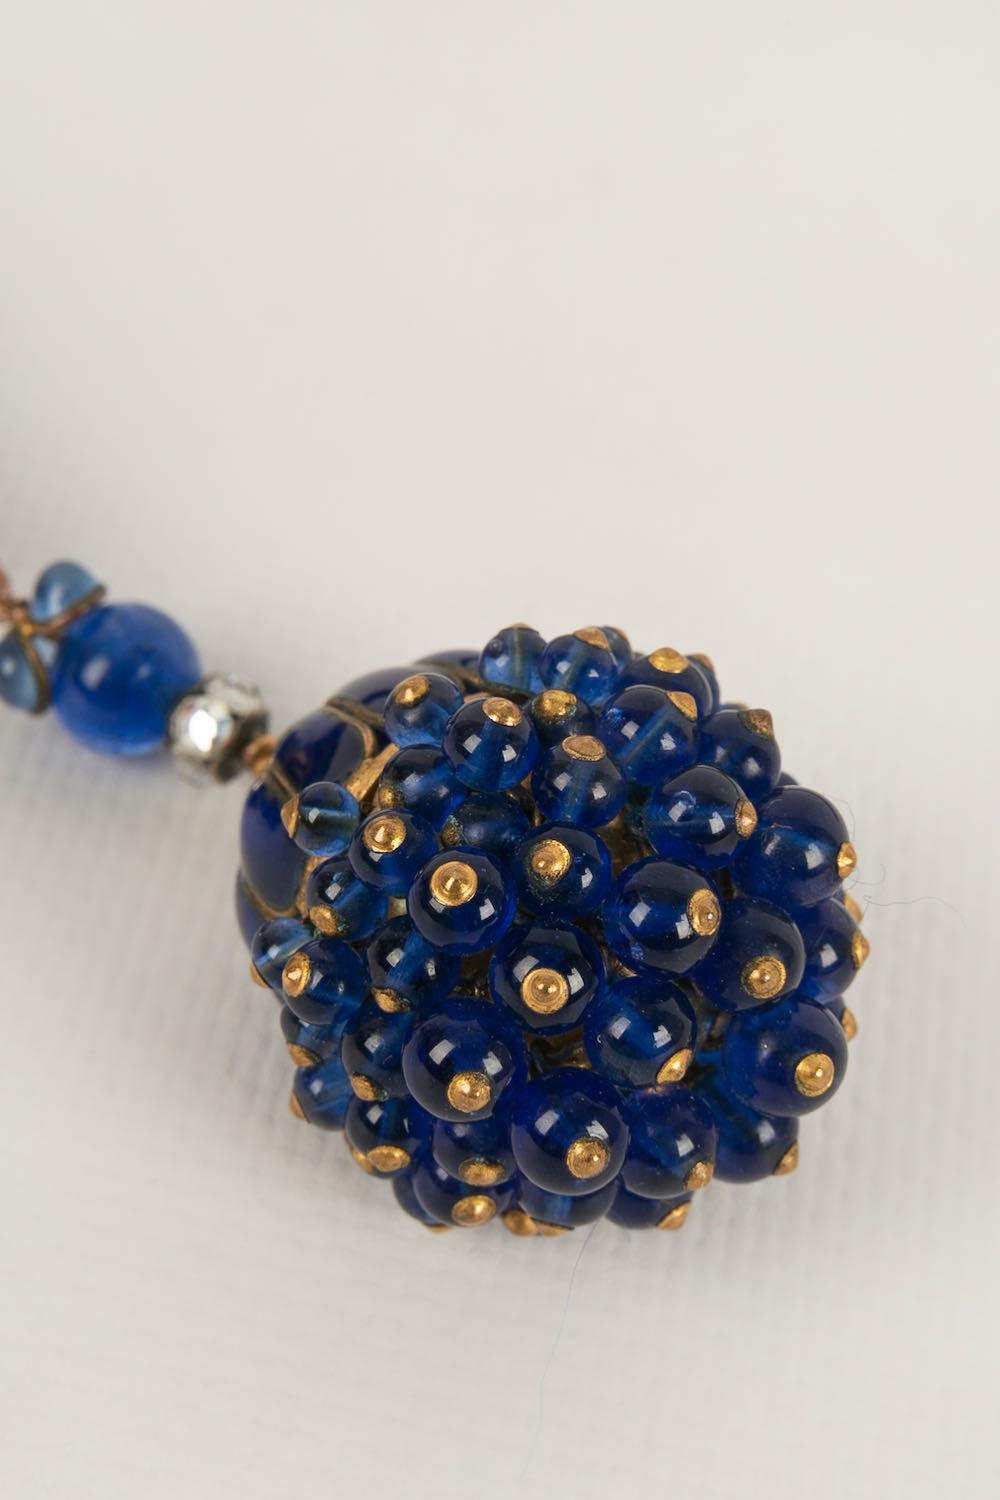 Vintage Blue Glass Beads Necklace 2